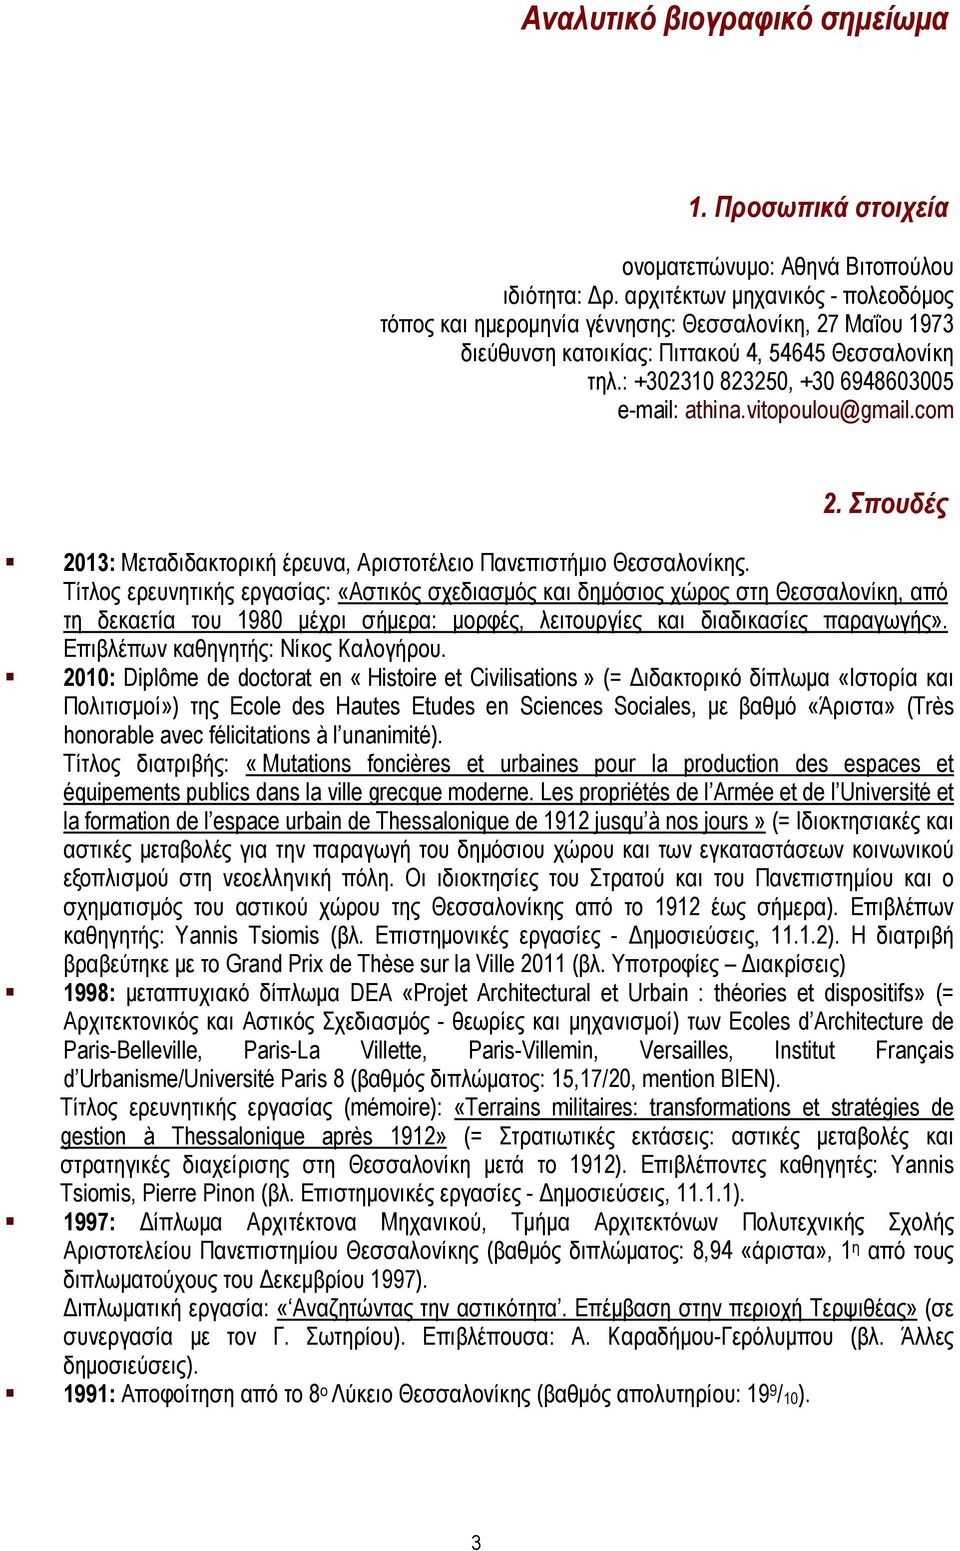 vitopoulou@gmail.com 2. Σπουδές 2013: Μεταδιδακτορική έρευνα, Αριστοτέλειο Πανεπιστήμιο Θεσσαλονίκης.